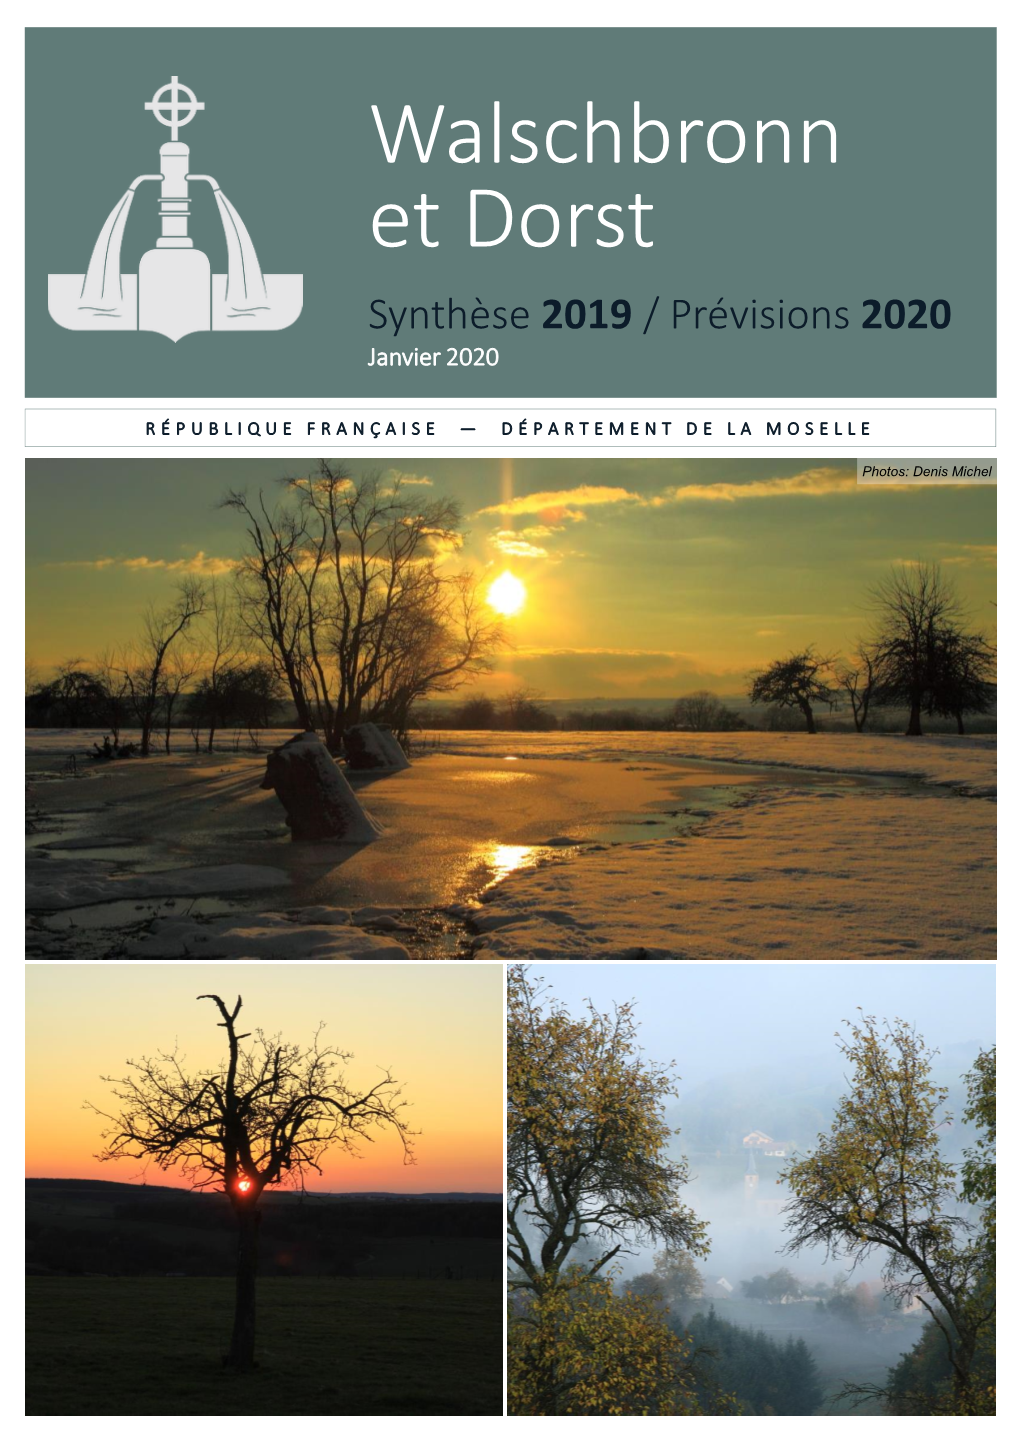 Walschbronn Et Dorst Synthèse 2019 / Prévisions 2020 Janvier 2020